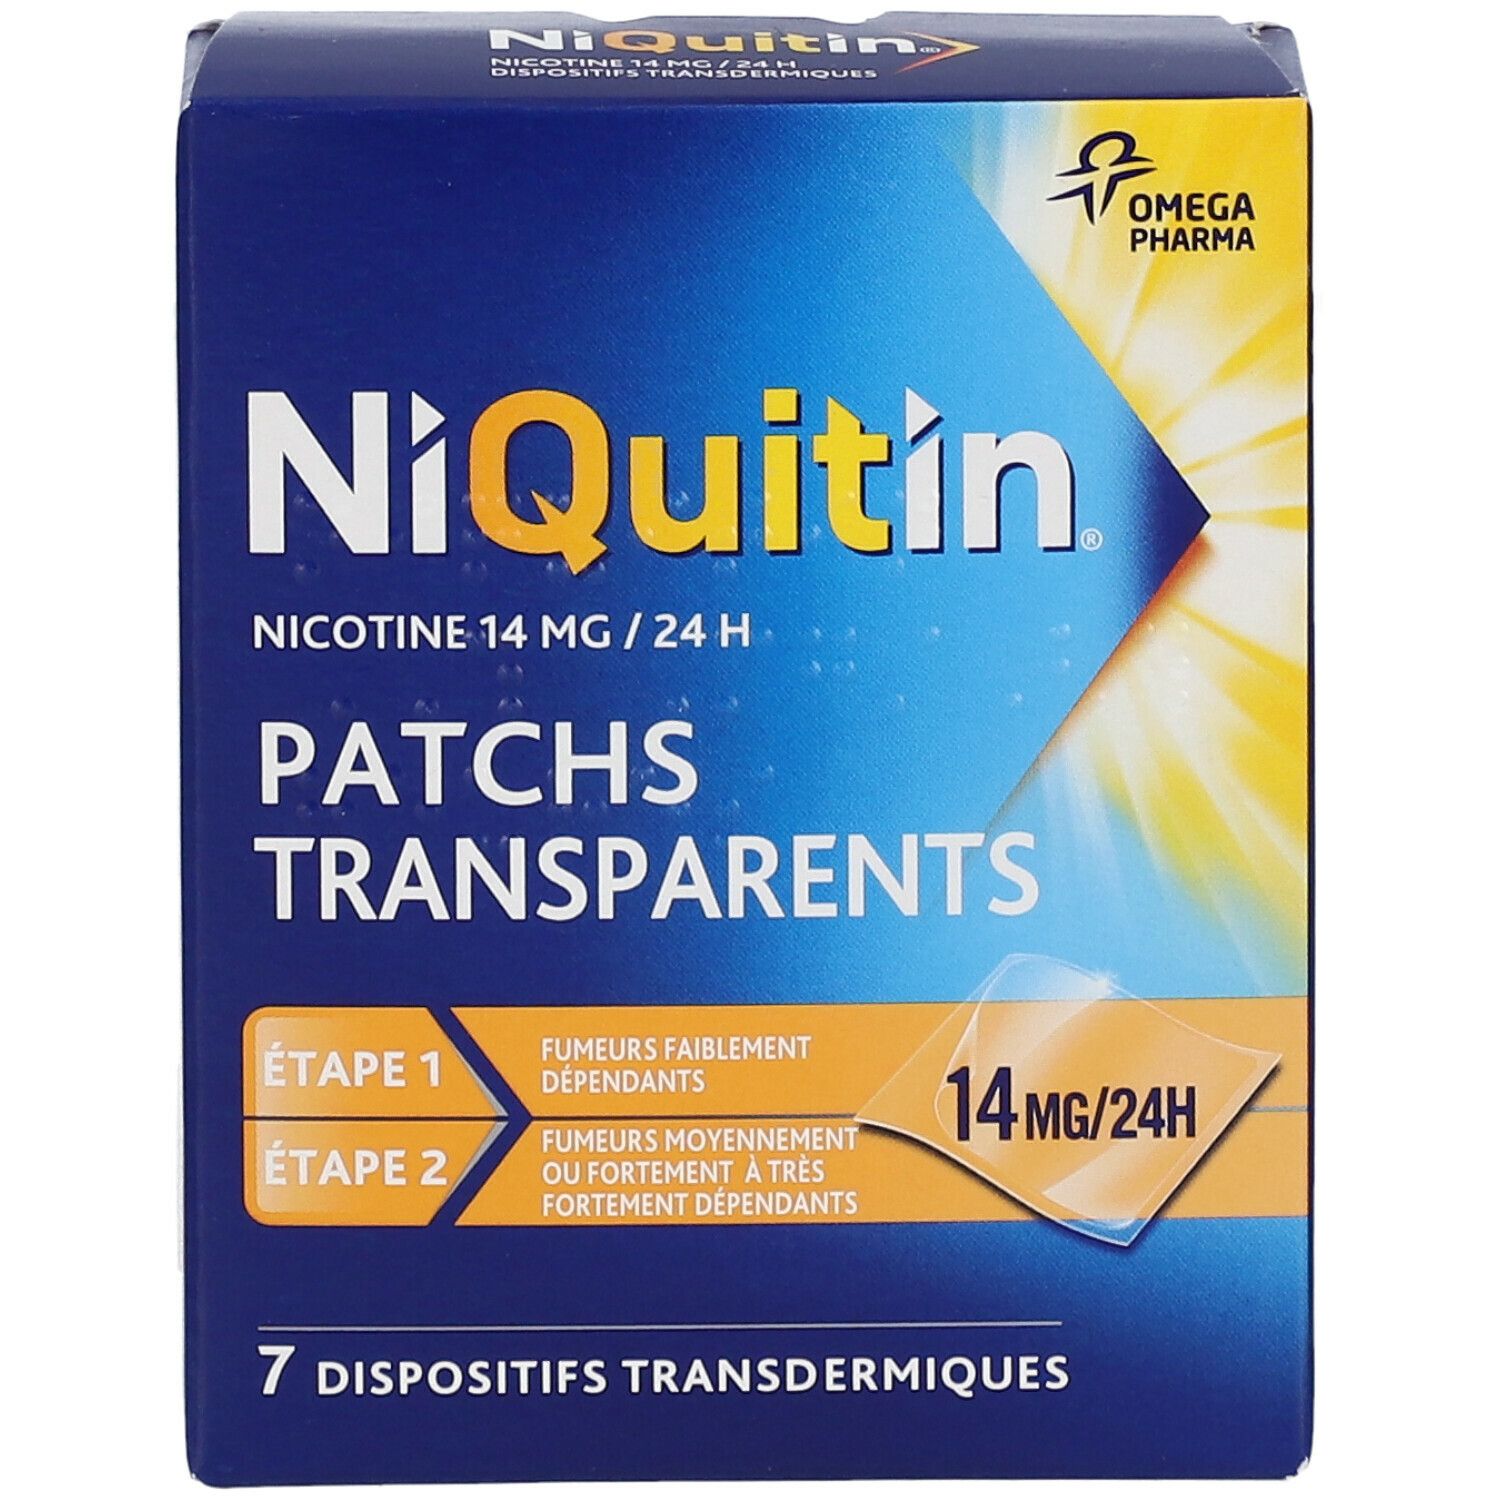 NiQuitin® Nicotine 14 mg/24 H